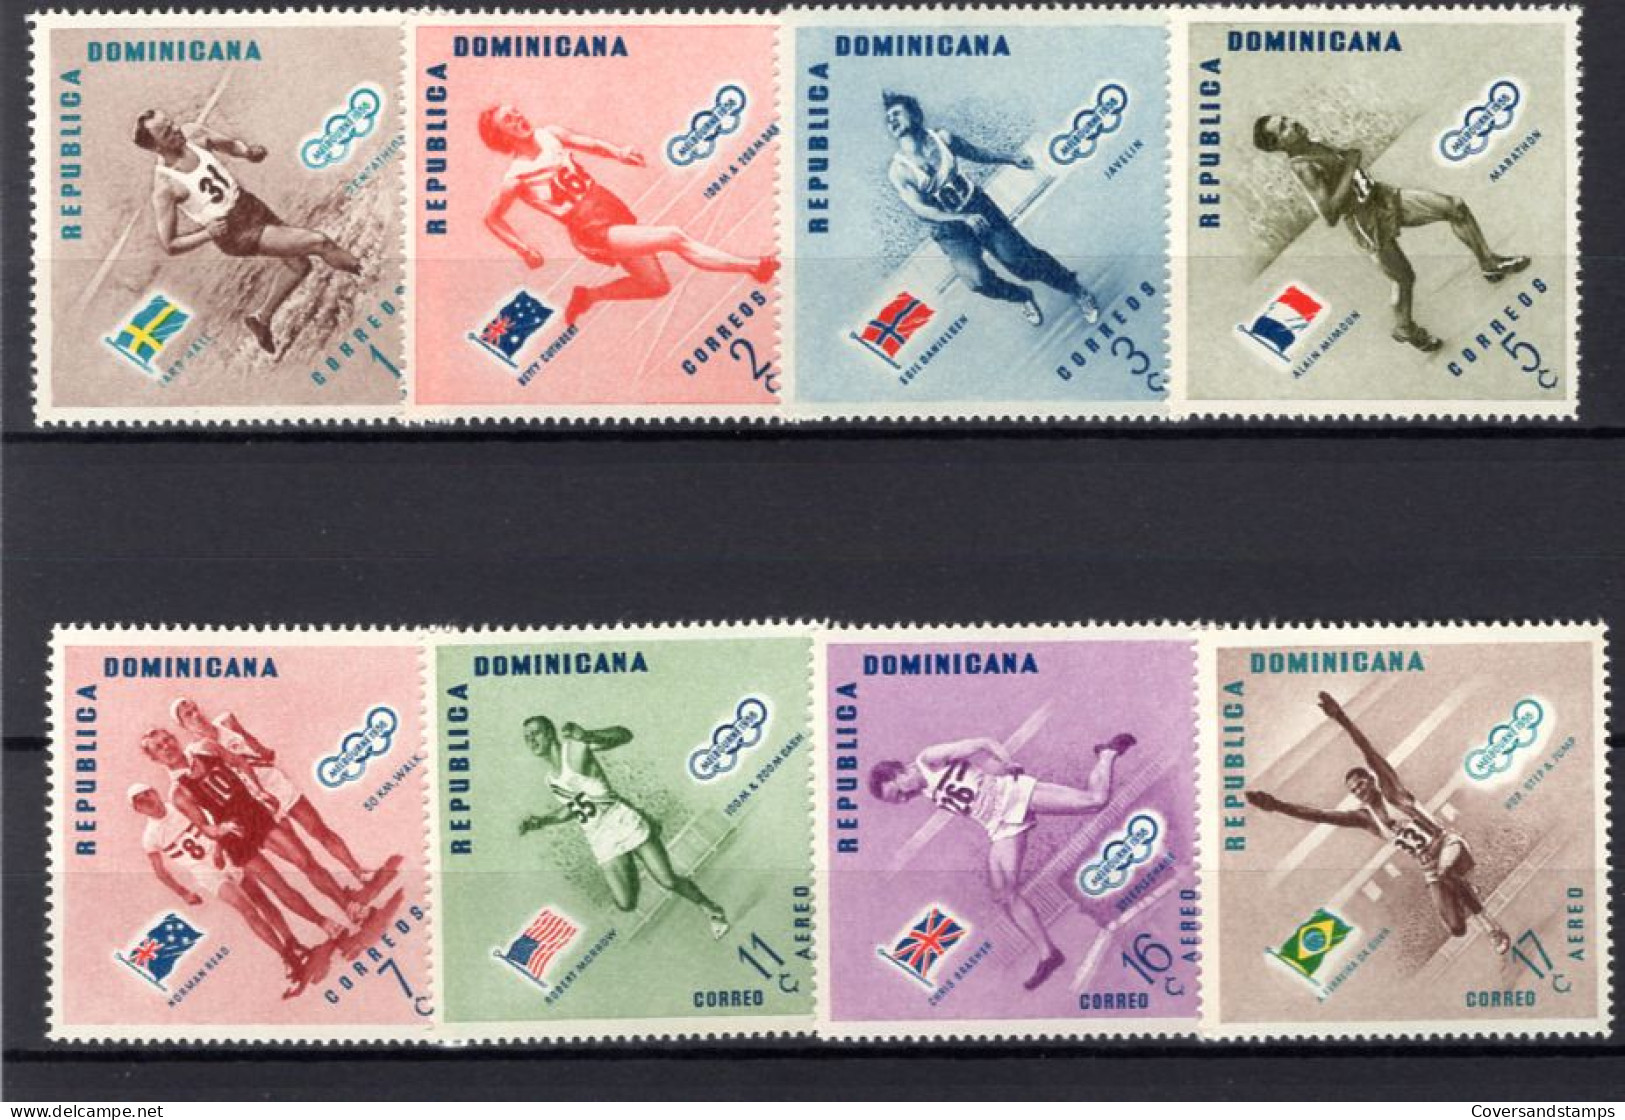  Republica Dominicana - Melbourne 1956 - Sommer 1956: Melbourne